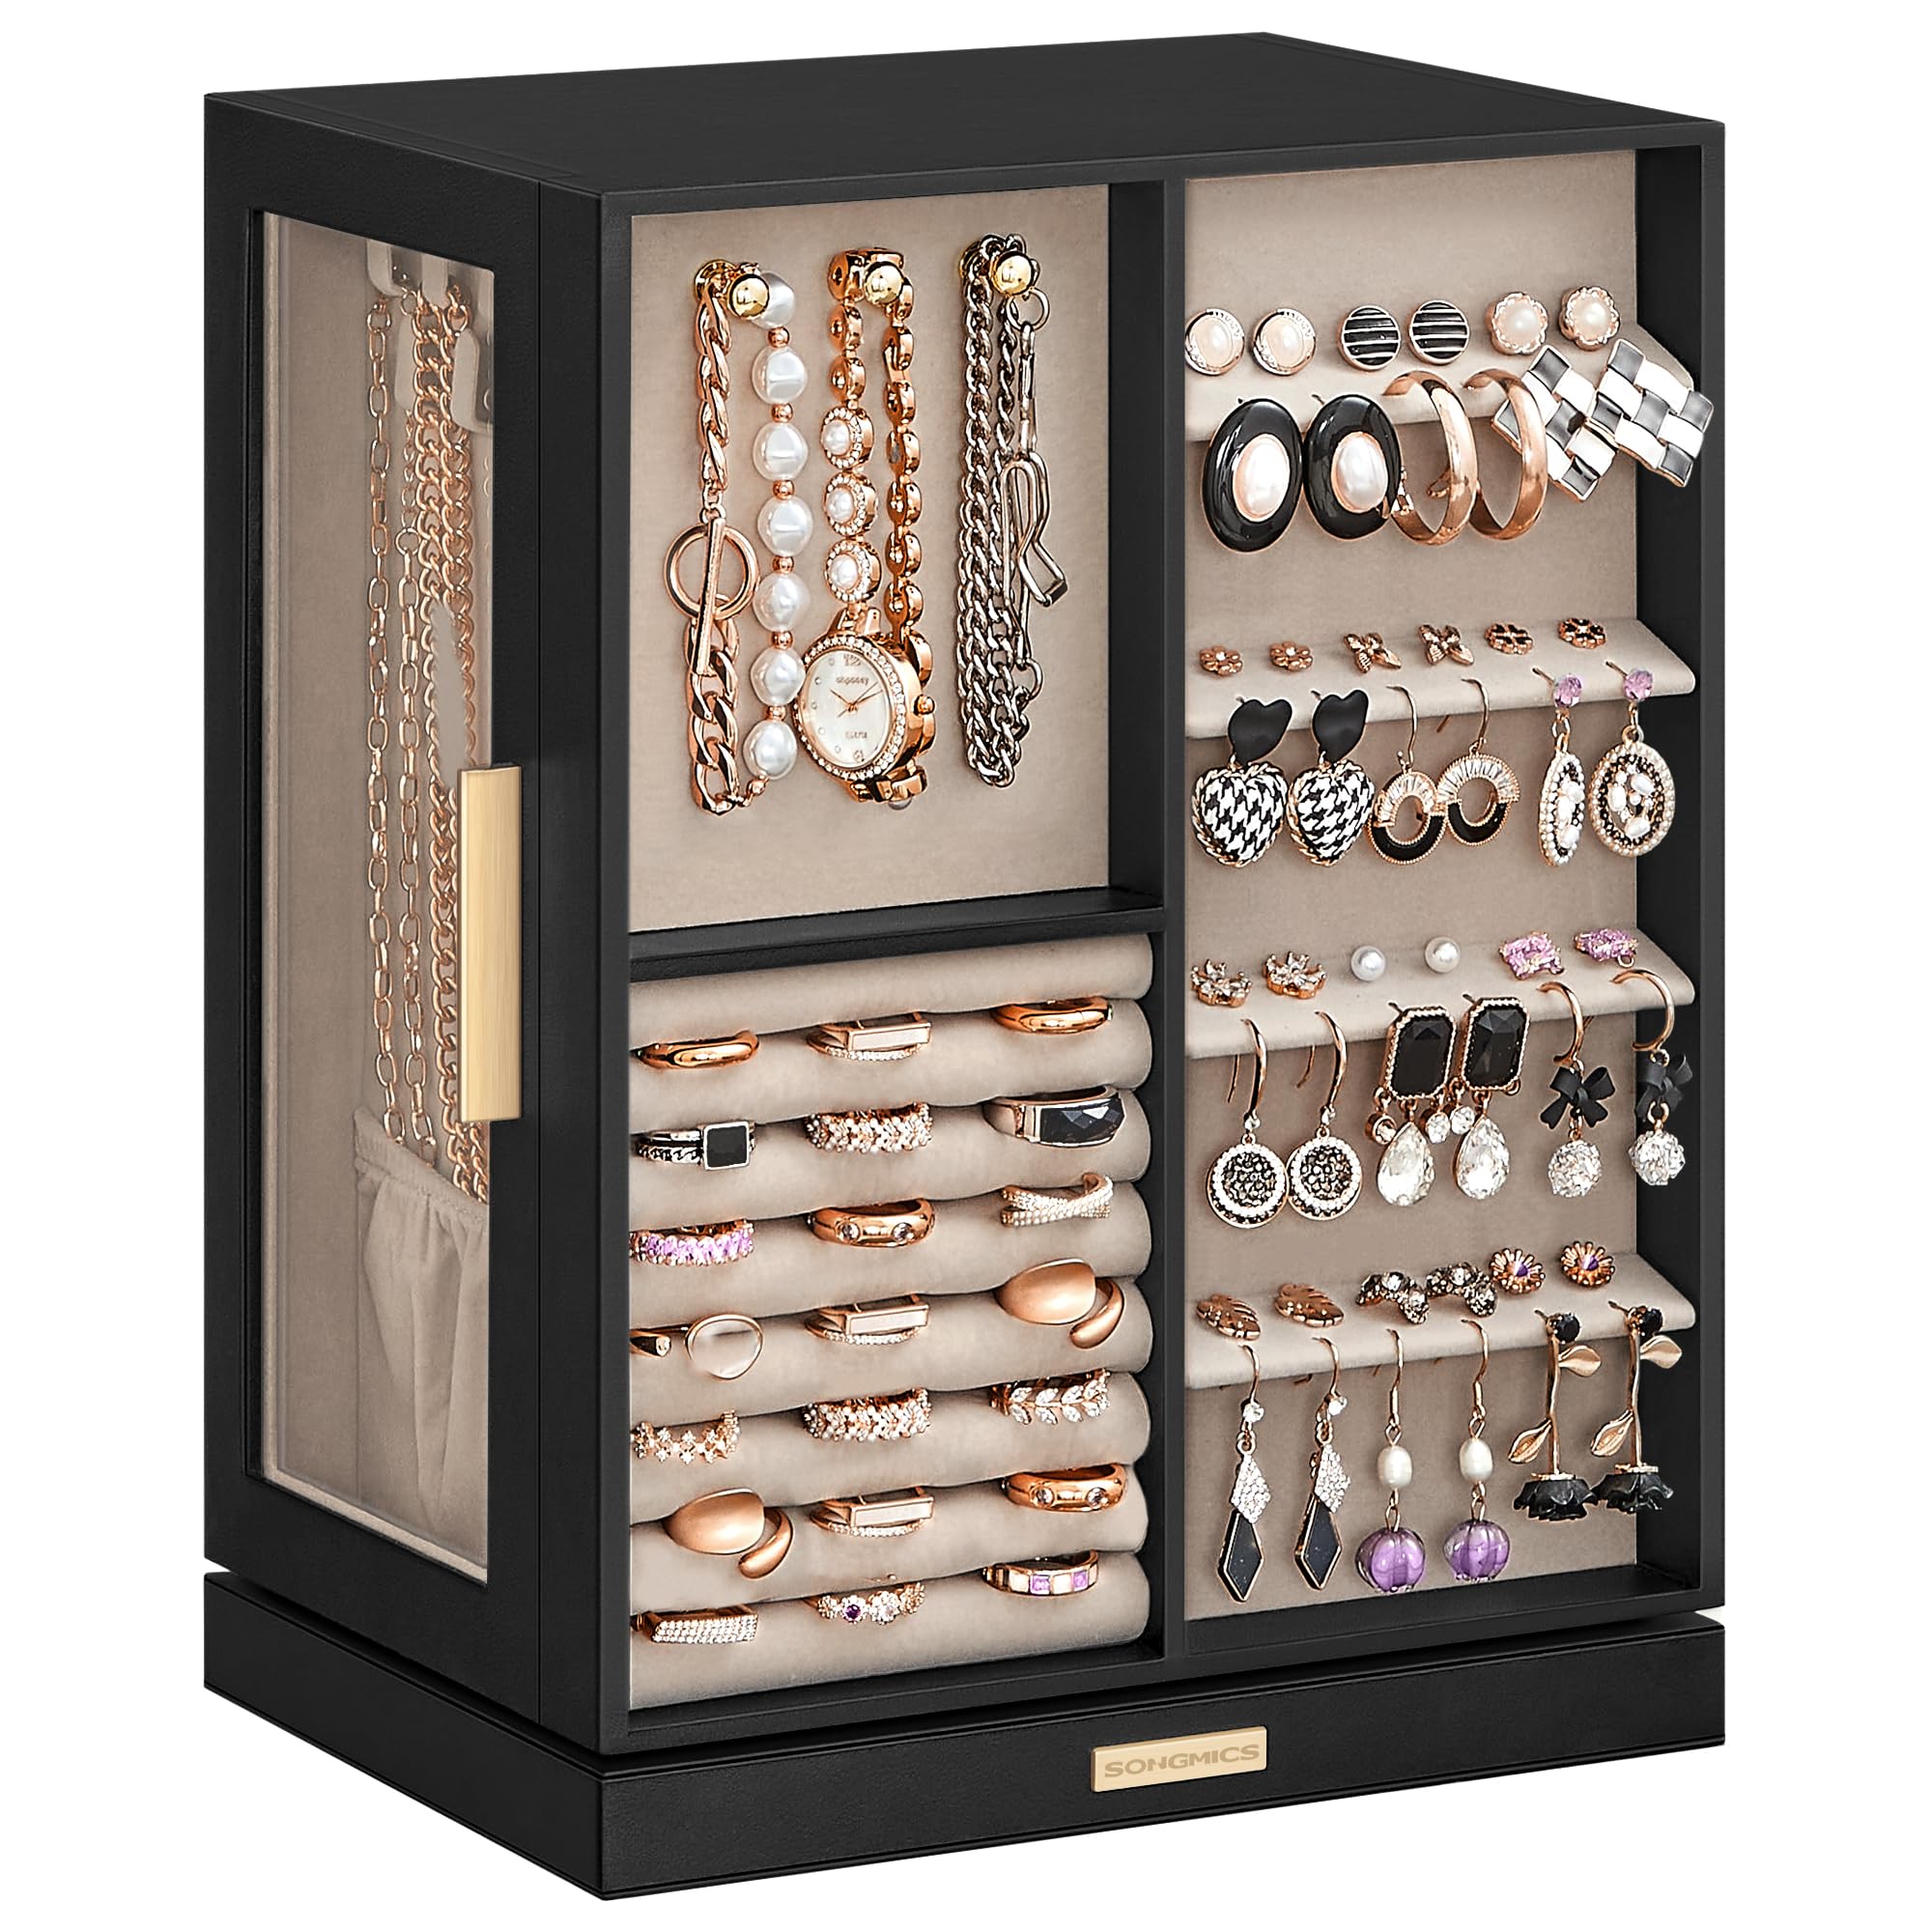 SONGMICS Jewelry Box 360° Rotating, Jewelry Storage Case with 5 Drawers, Jewelry Organizer, Glass Window, Spacious, Vertical Jewelry Storage, Open Design, Christmas Gifts, Graphite Black UJBC170B01